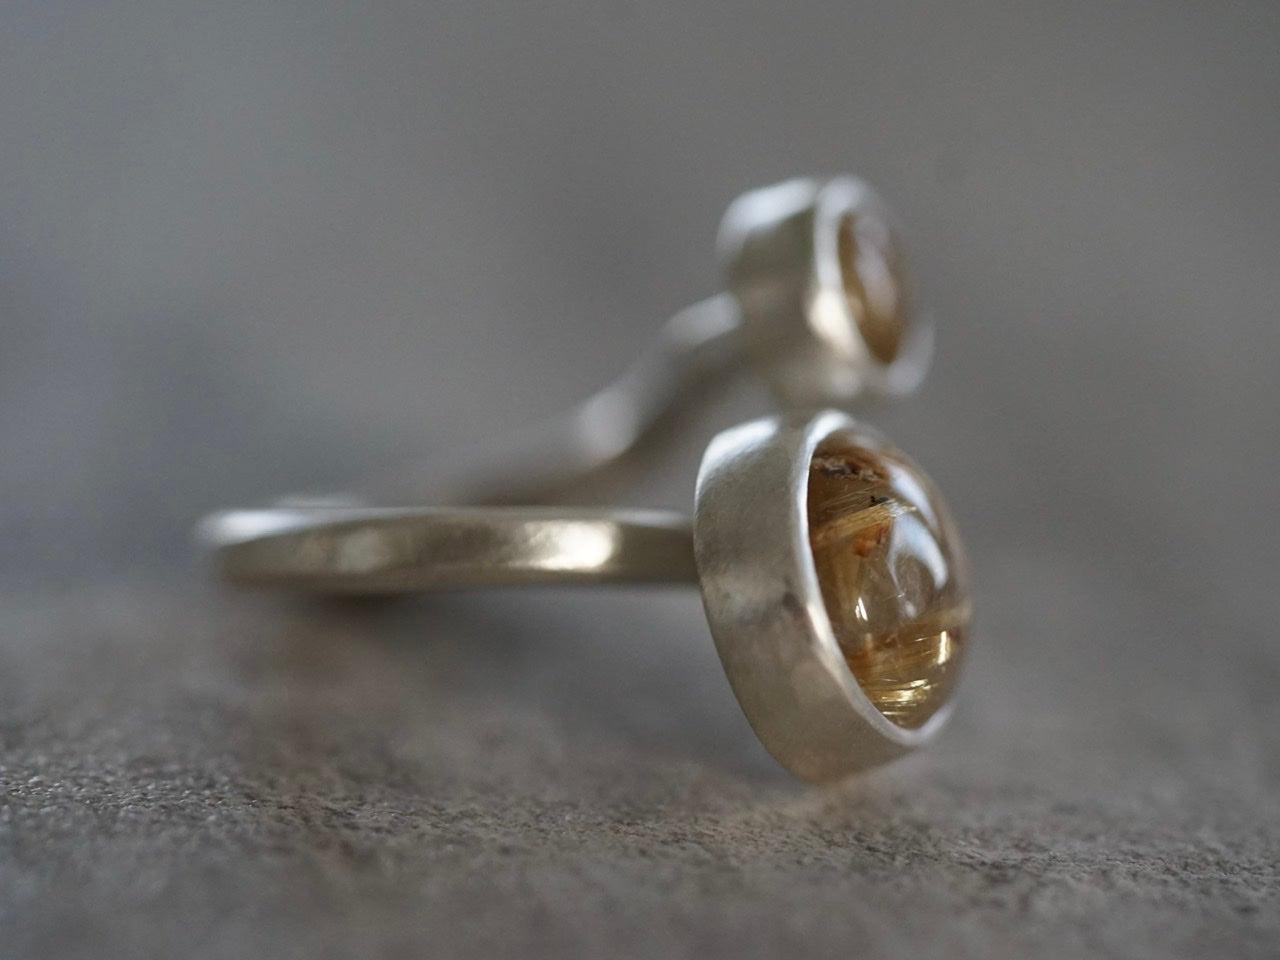 Golden rutile quartz spiral ring